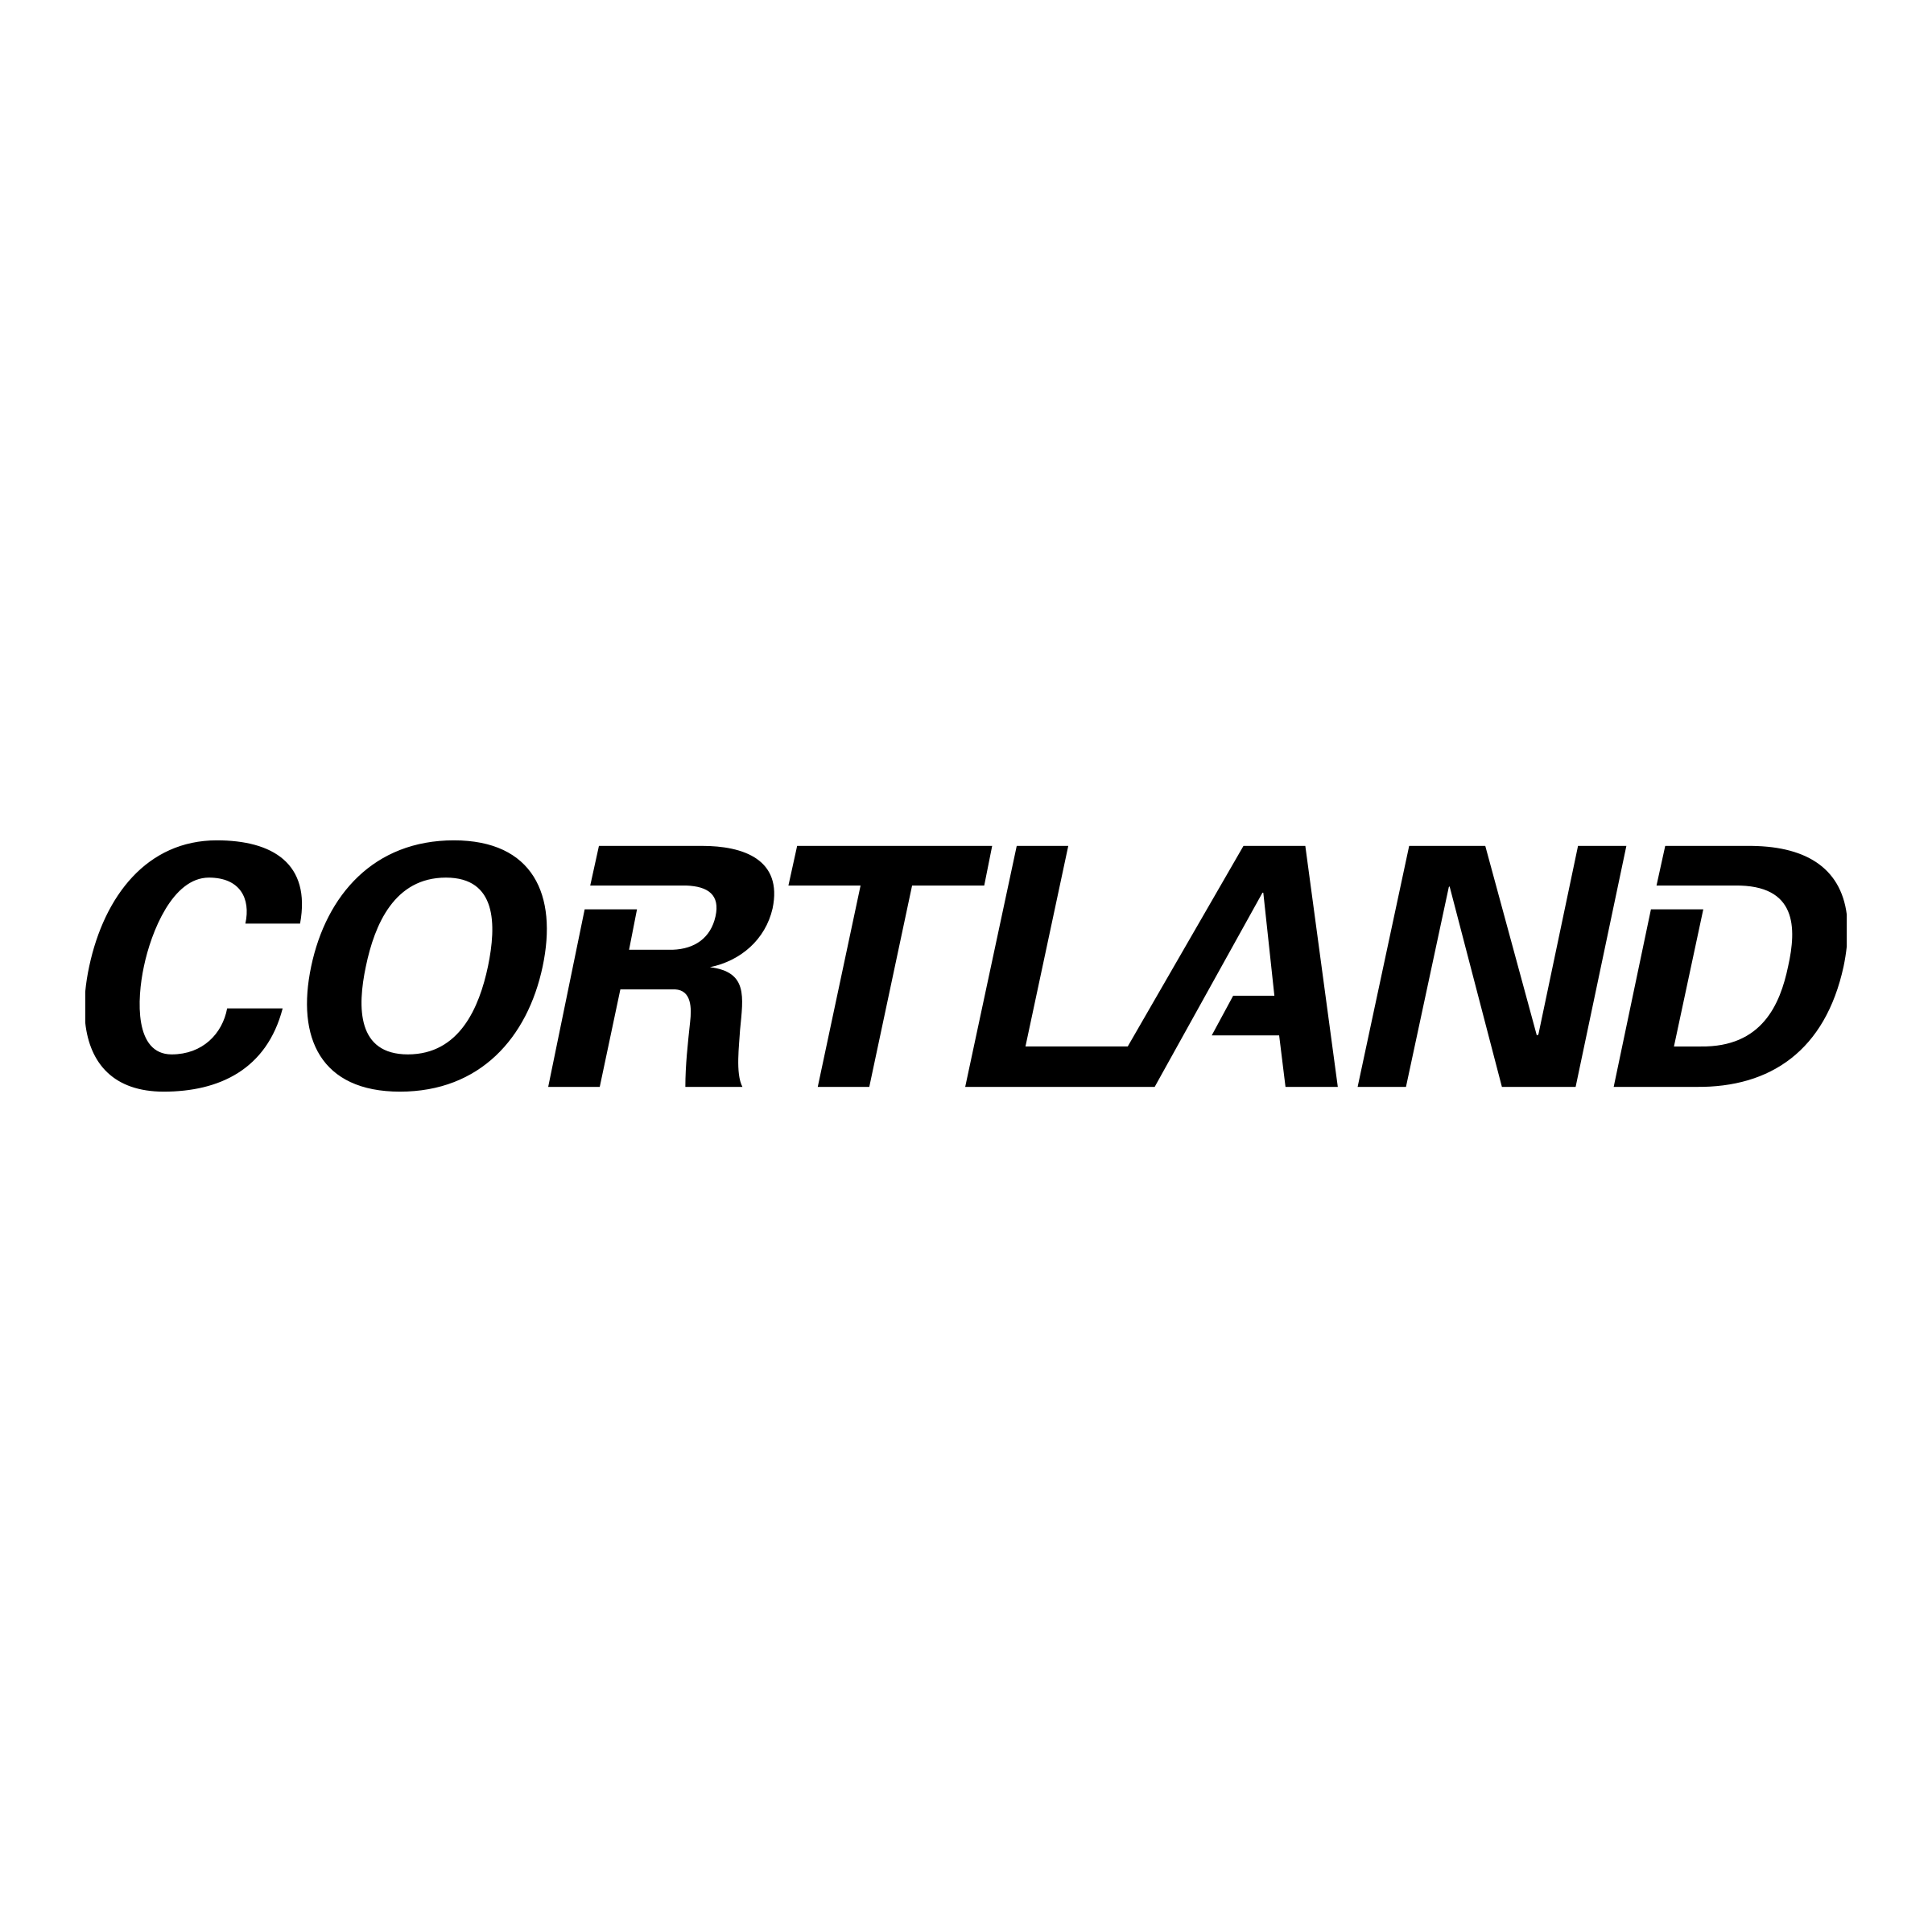 Cortland Logo - Cortland Logo PNG Transparent & SVG Vector - Freebie Supply